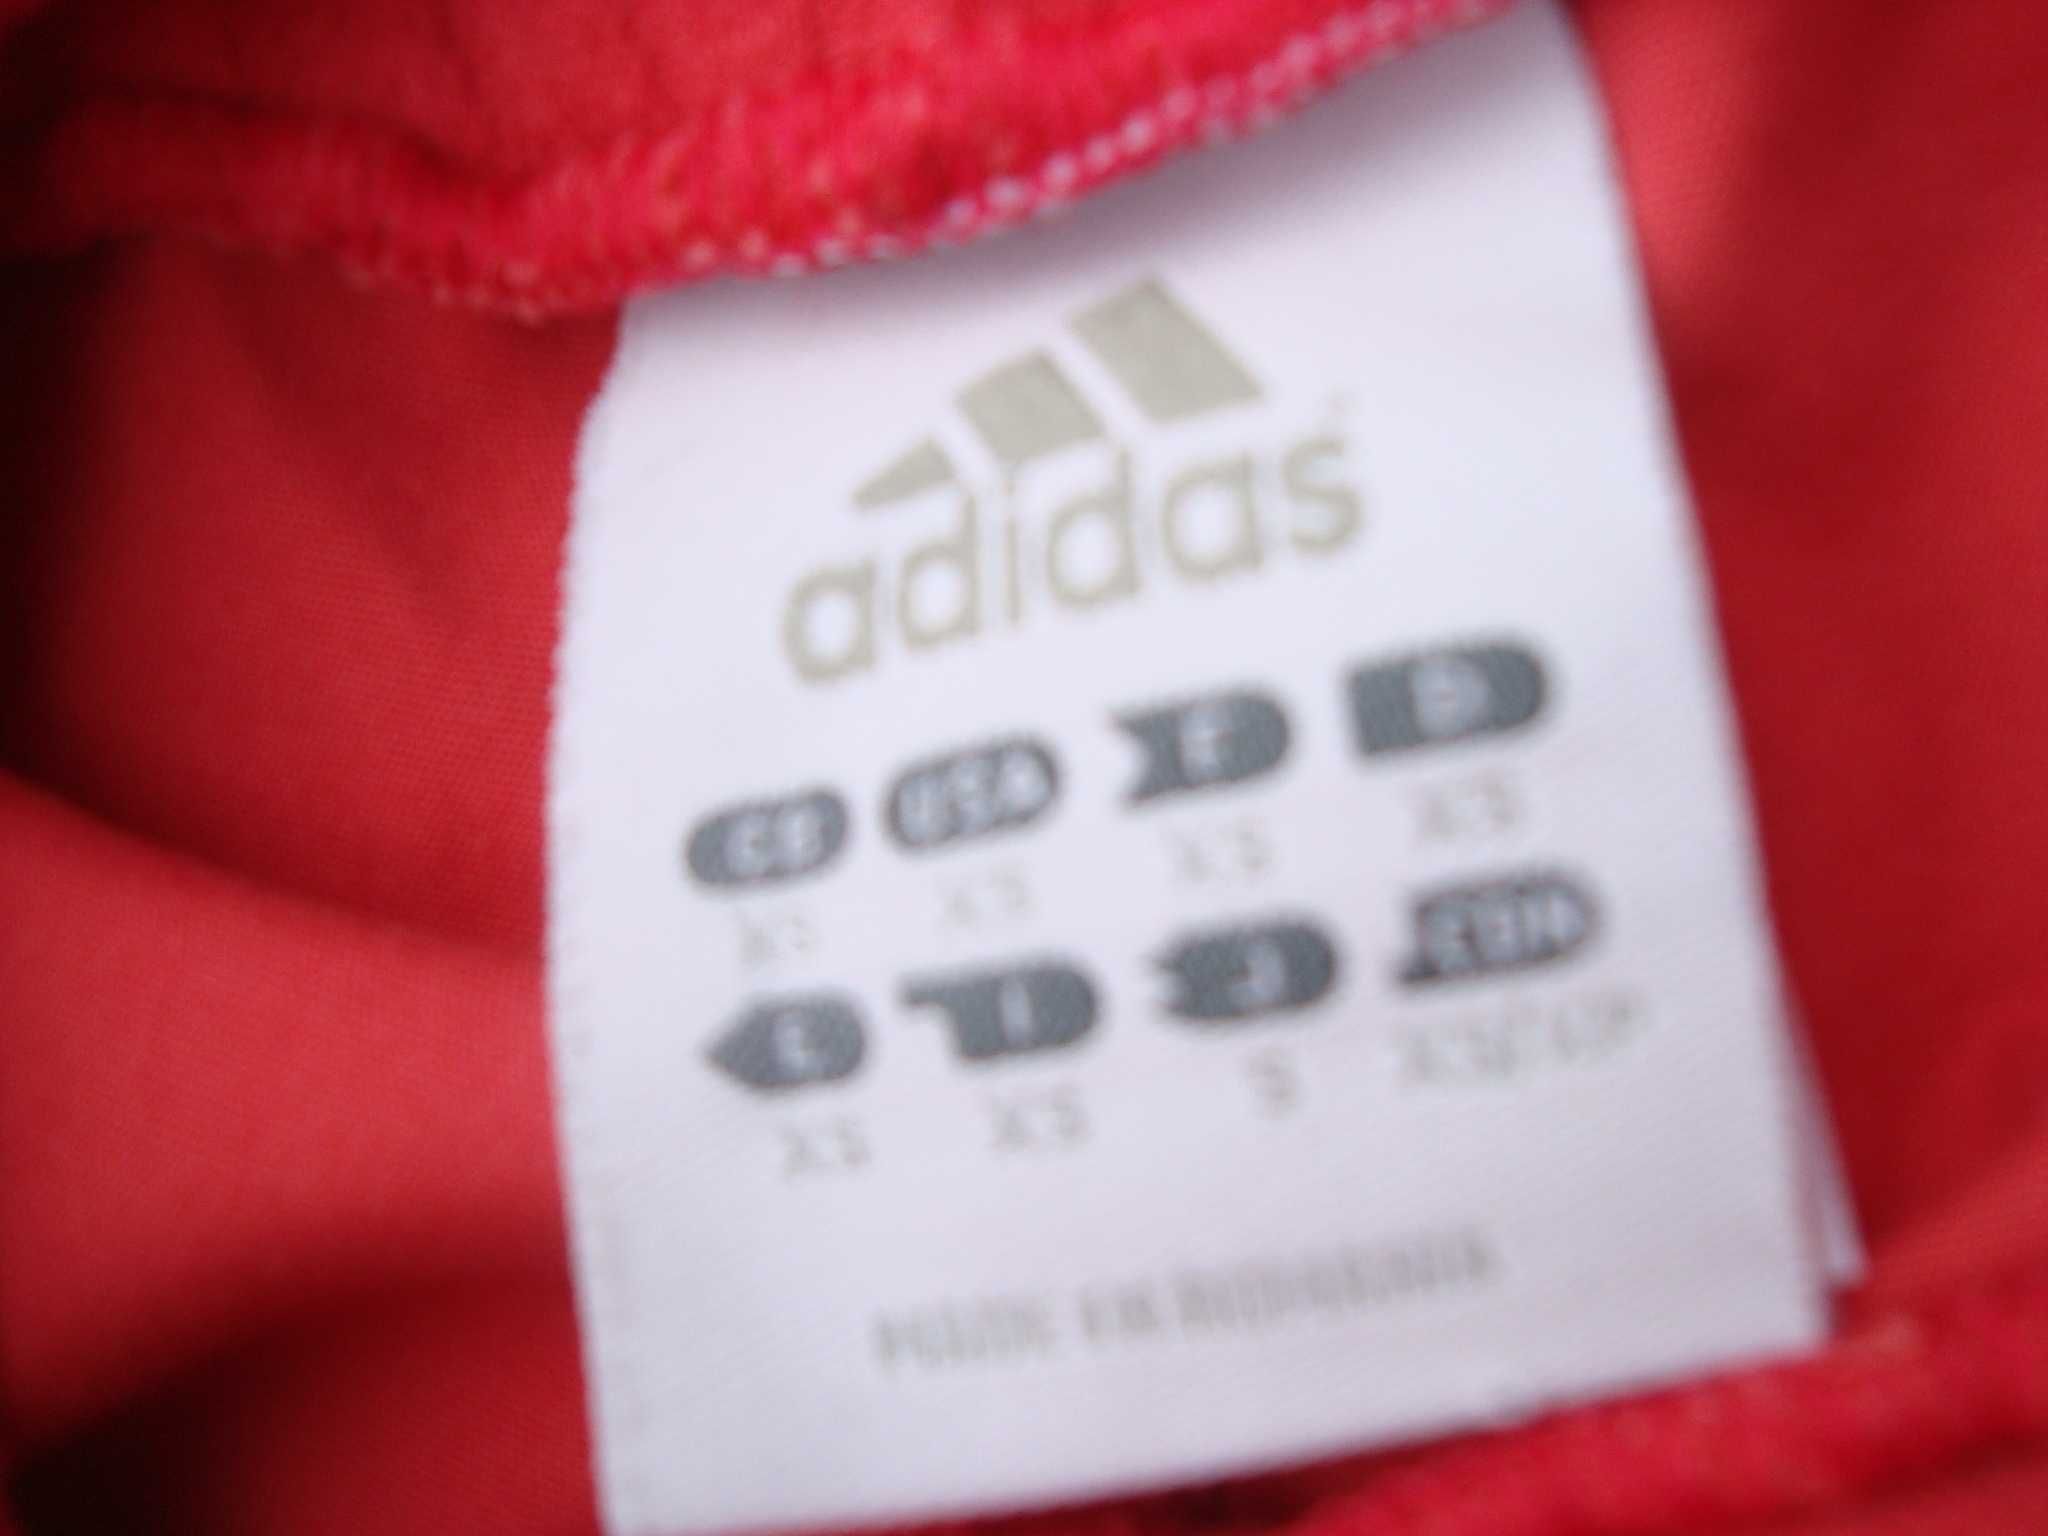 spodnie damskie Adidas roz S -pas do 78 cm -Super